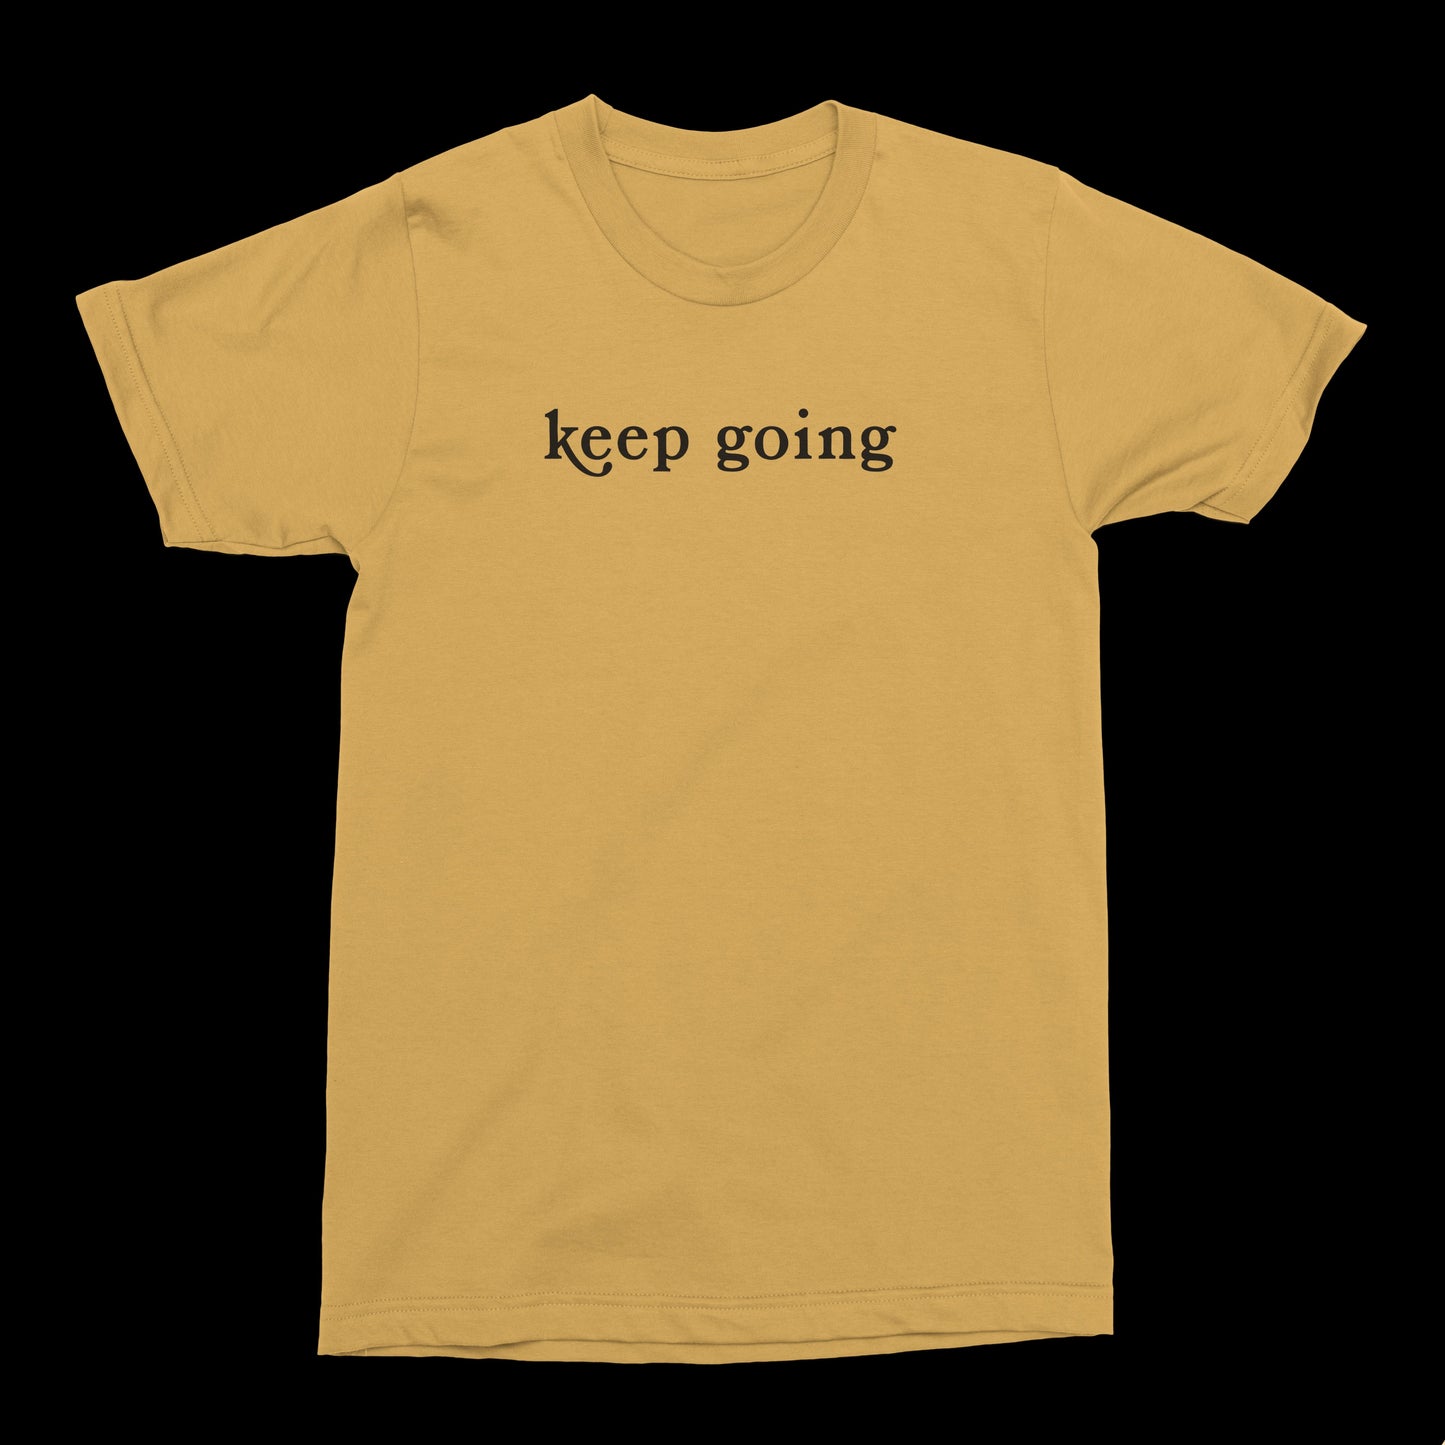 the keep going t-shirt